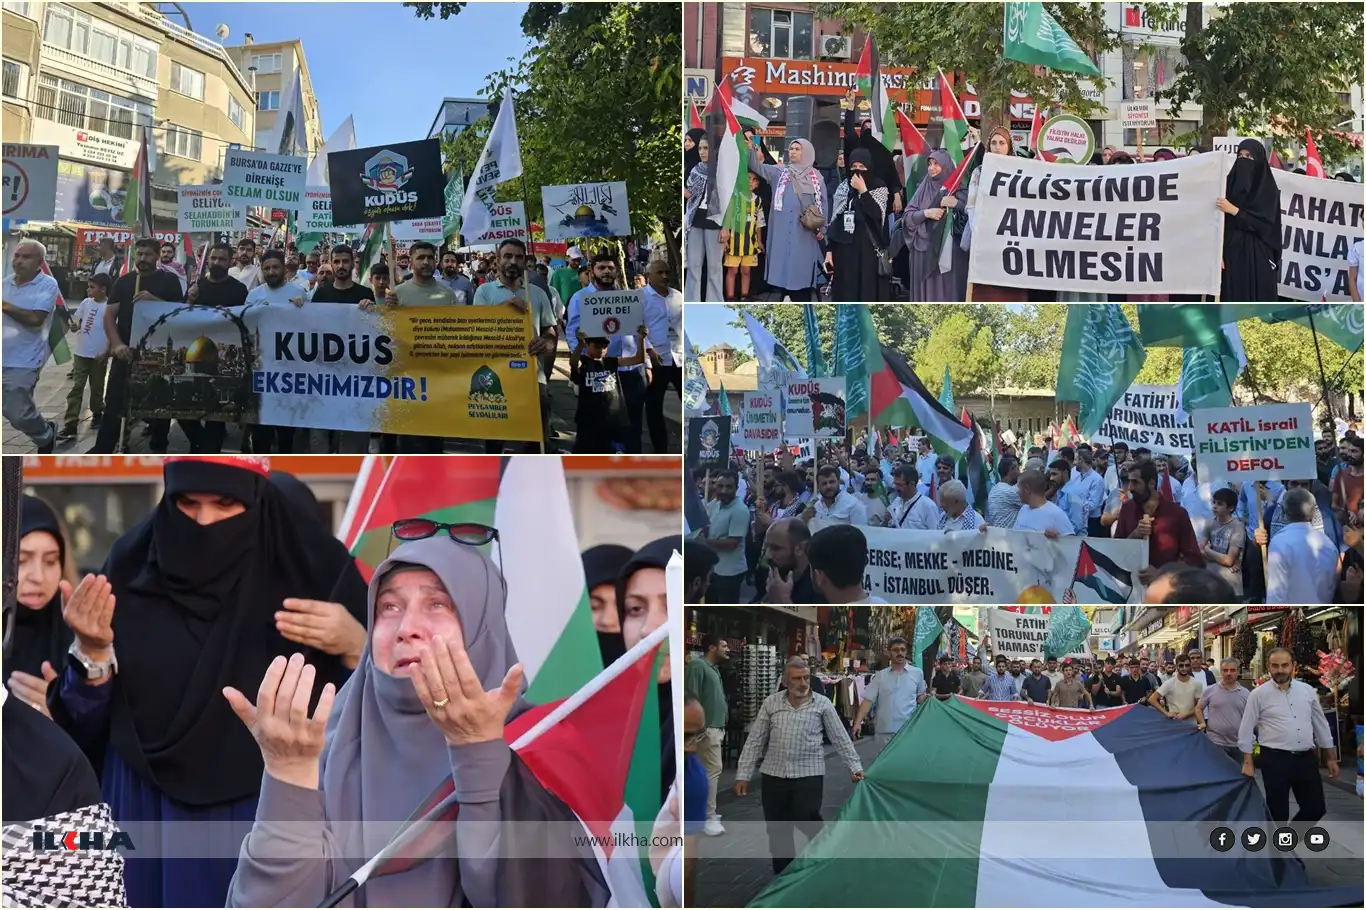 Hundreds in Bursa demand justice for Gaza, boycott Israeli goods